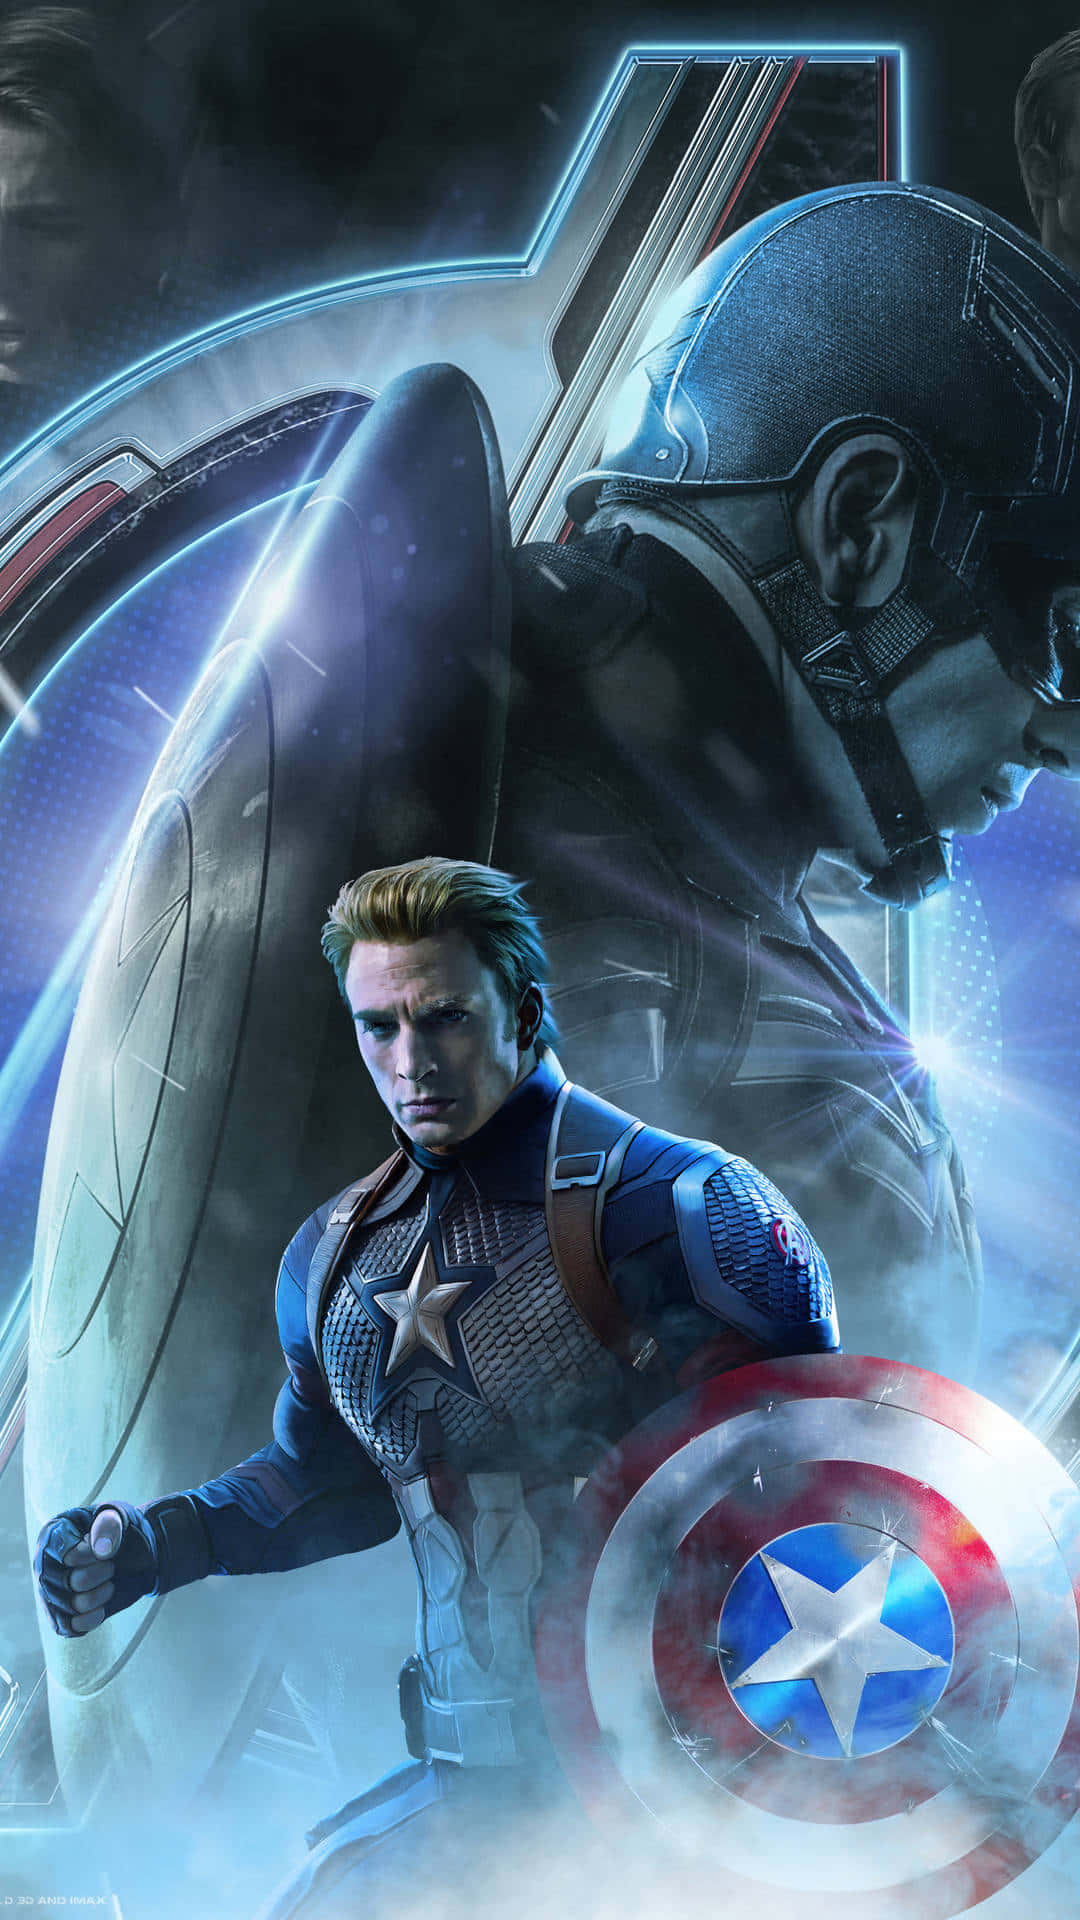 HD wallpaper of iconic Marvel superhero Captain America